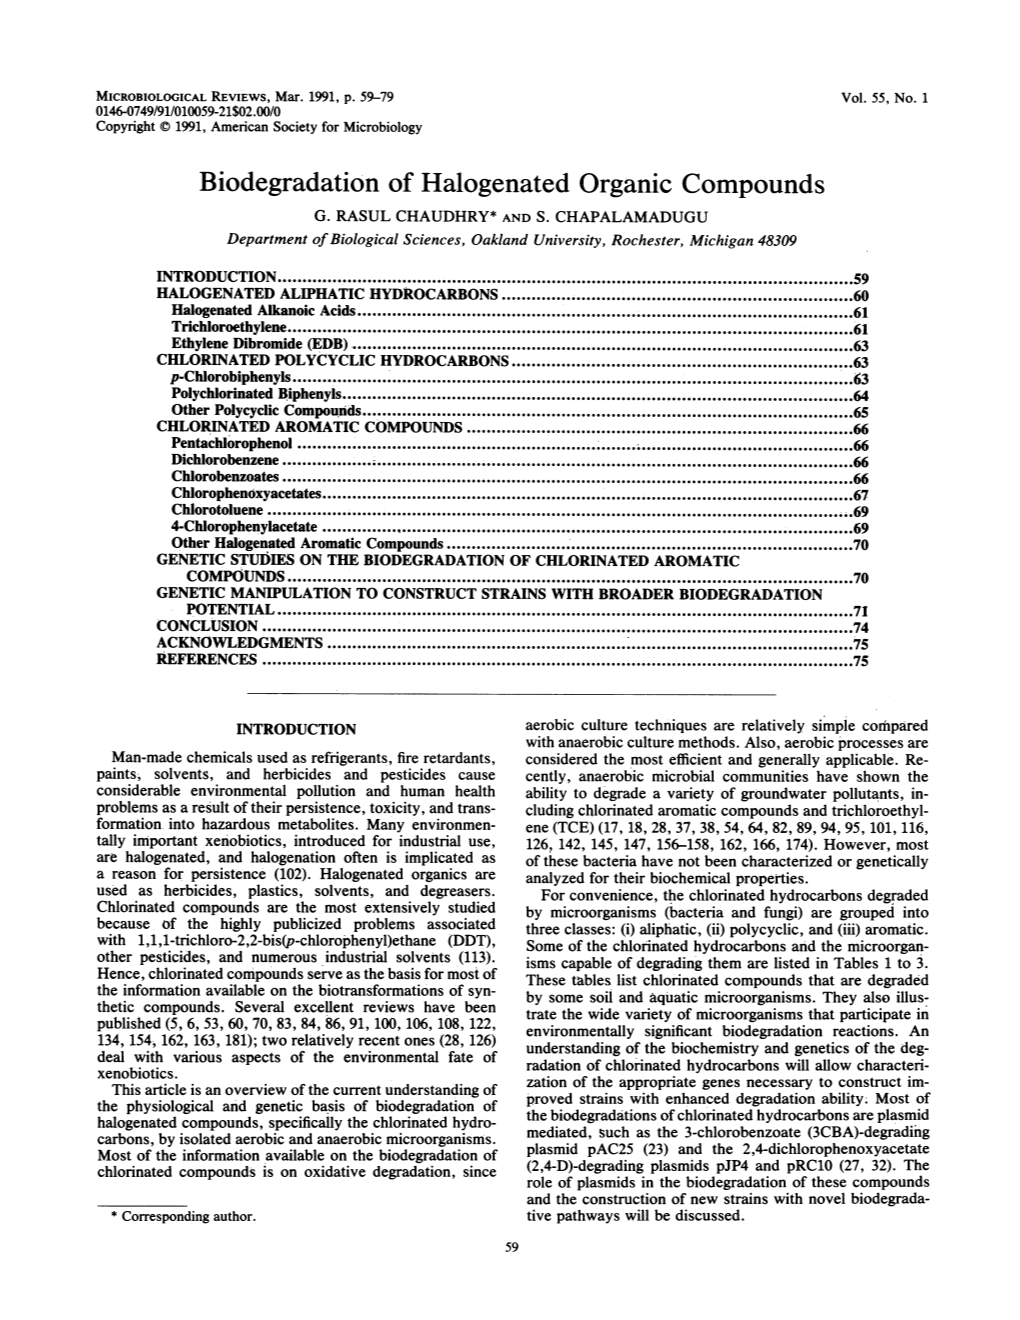 Biodegradation of Halogenated Organic Compounds G